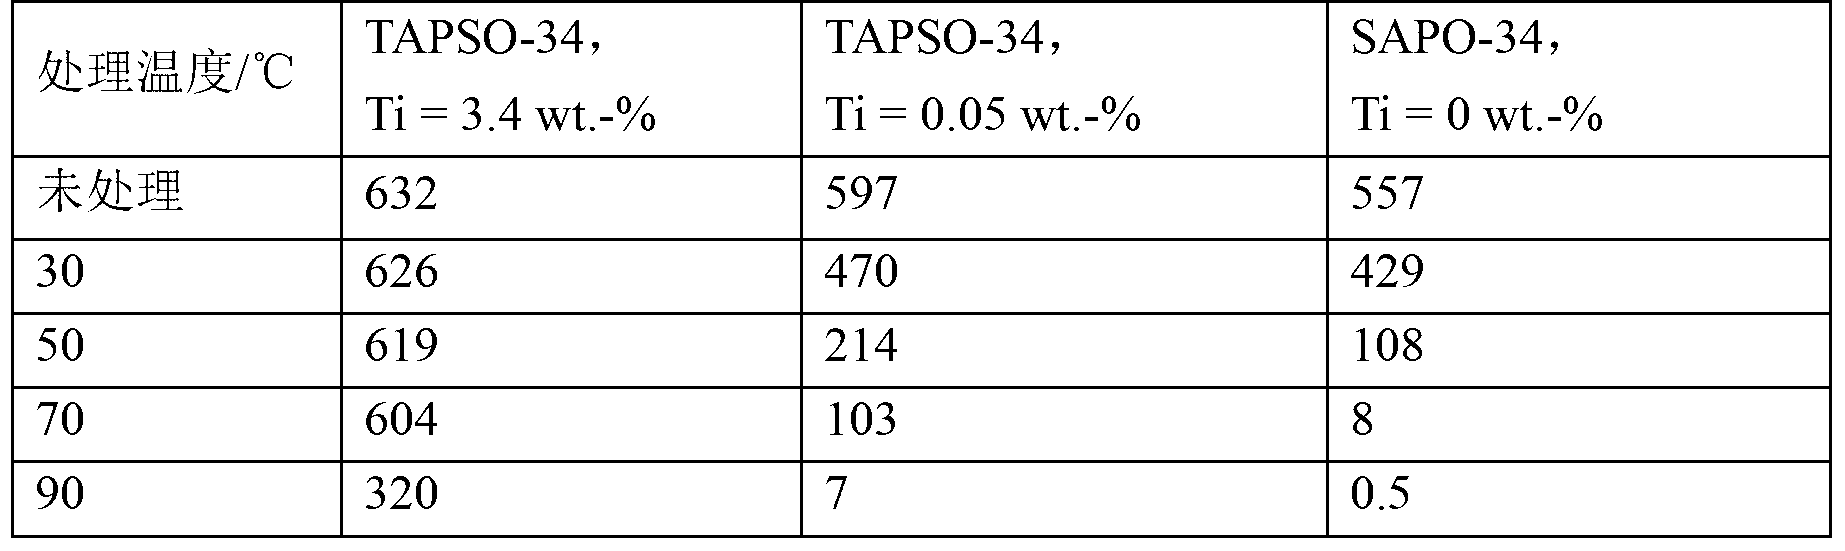 Titano-silico-alumo-phosphate